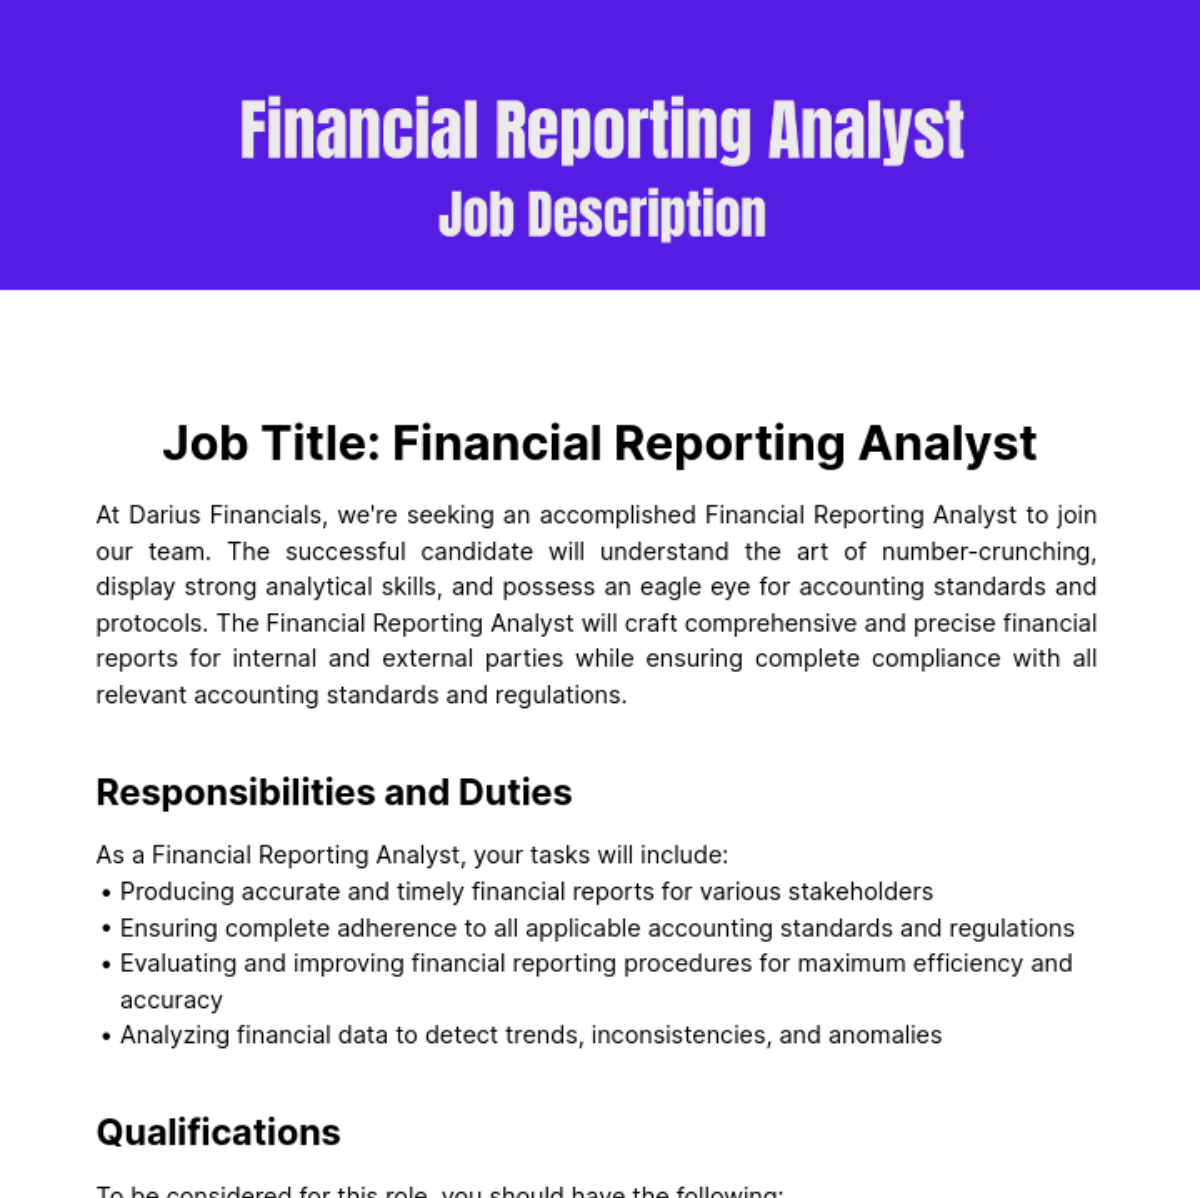 Financial Reporting Analyst Job Description Template